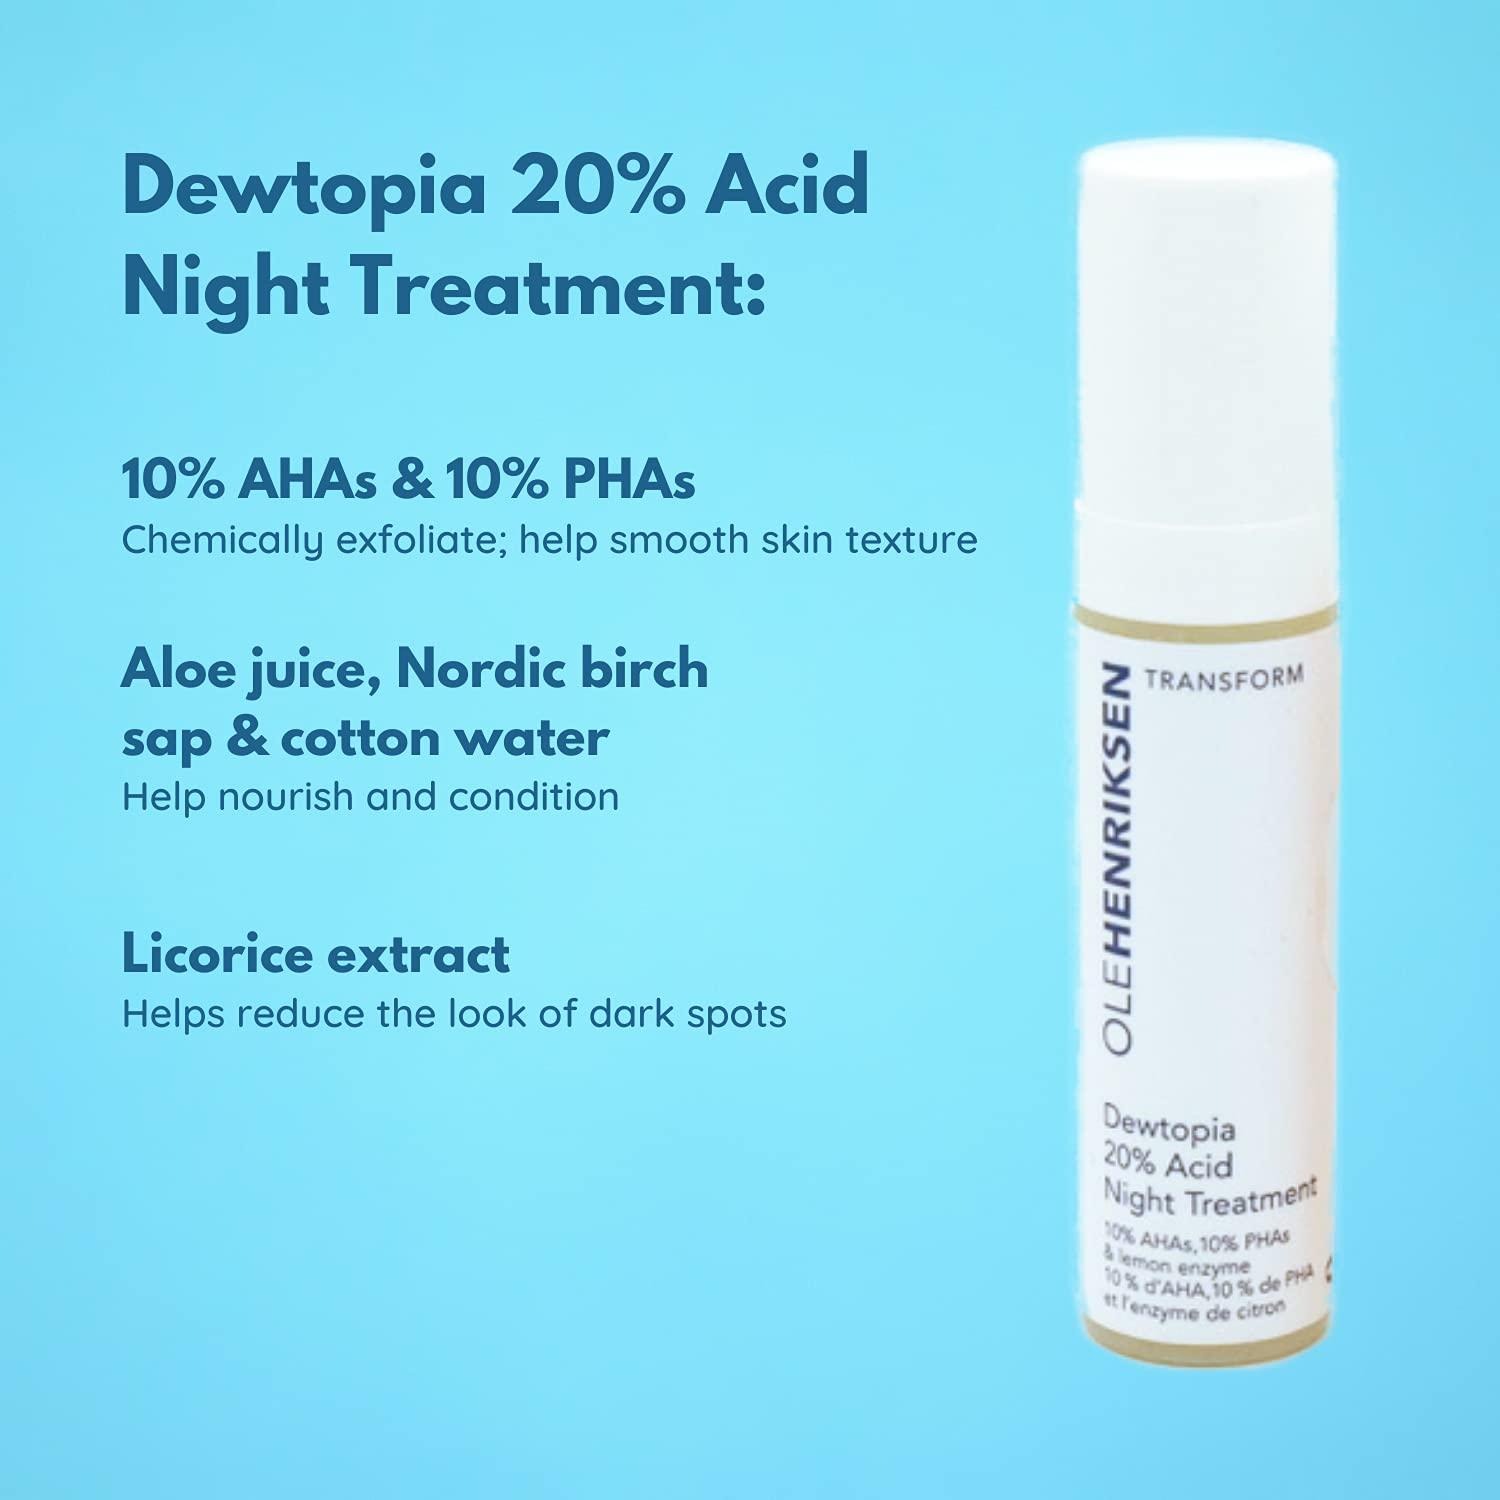 Ole Henriksen Dewtopia 20% Acid Night Treatment Review